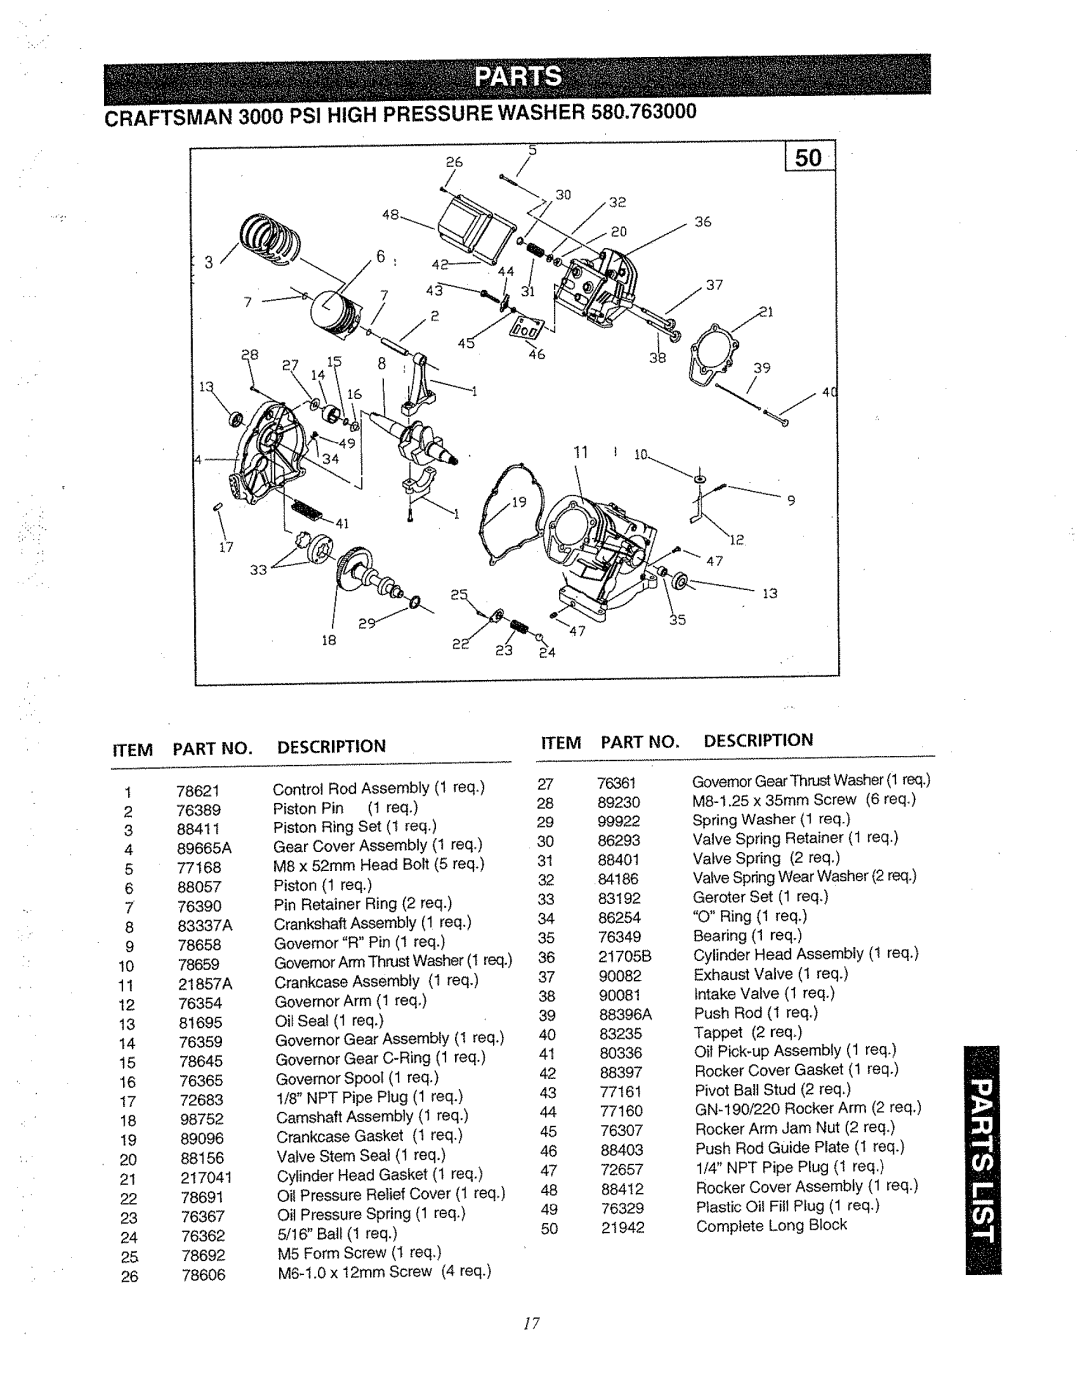 Craftsman 580.763 owner manual CRAFTSMAN 3000 PSI HIGH PRESSURE WASHER, Item Part No, 76390, Description, Piston Pin 